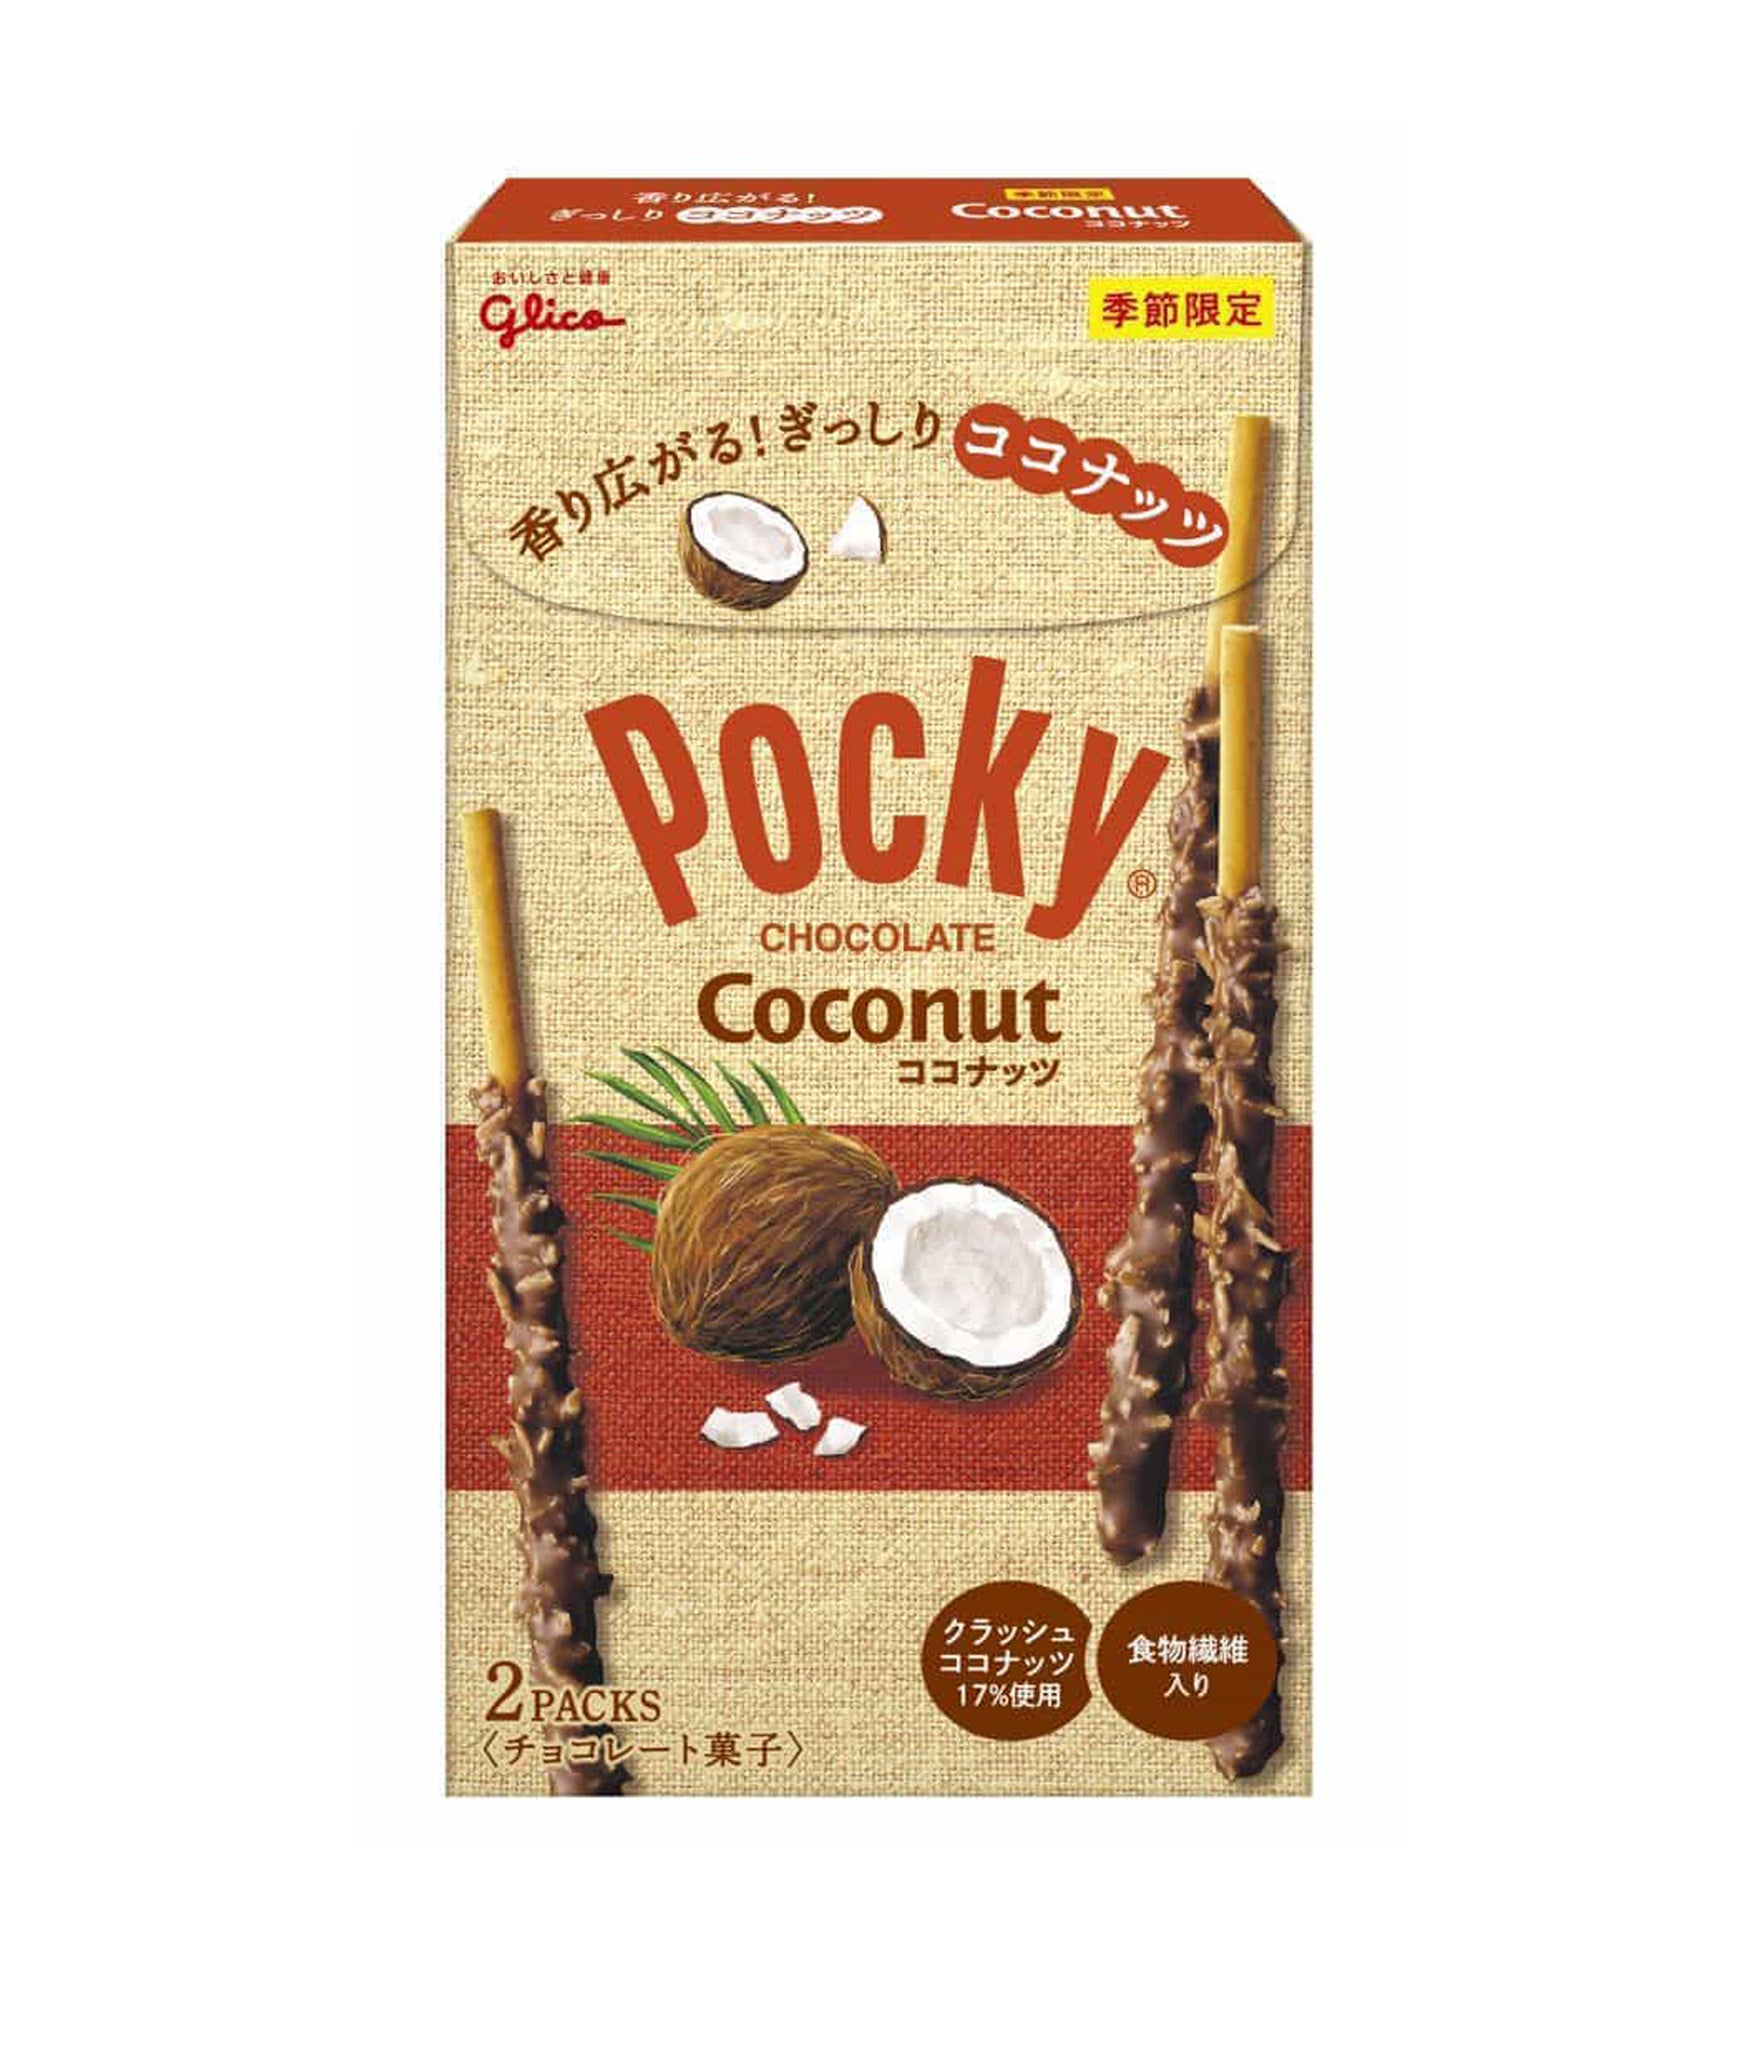 Pocky 椰子巧克力 Coconut